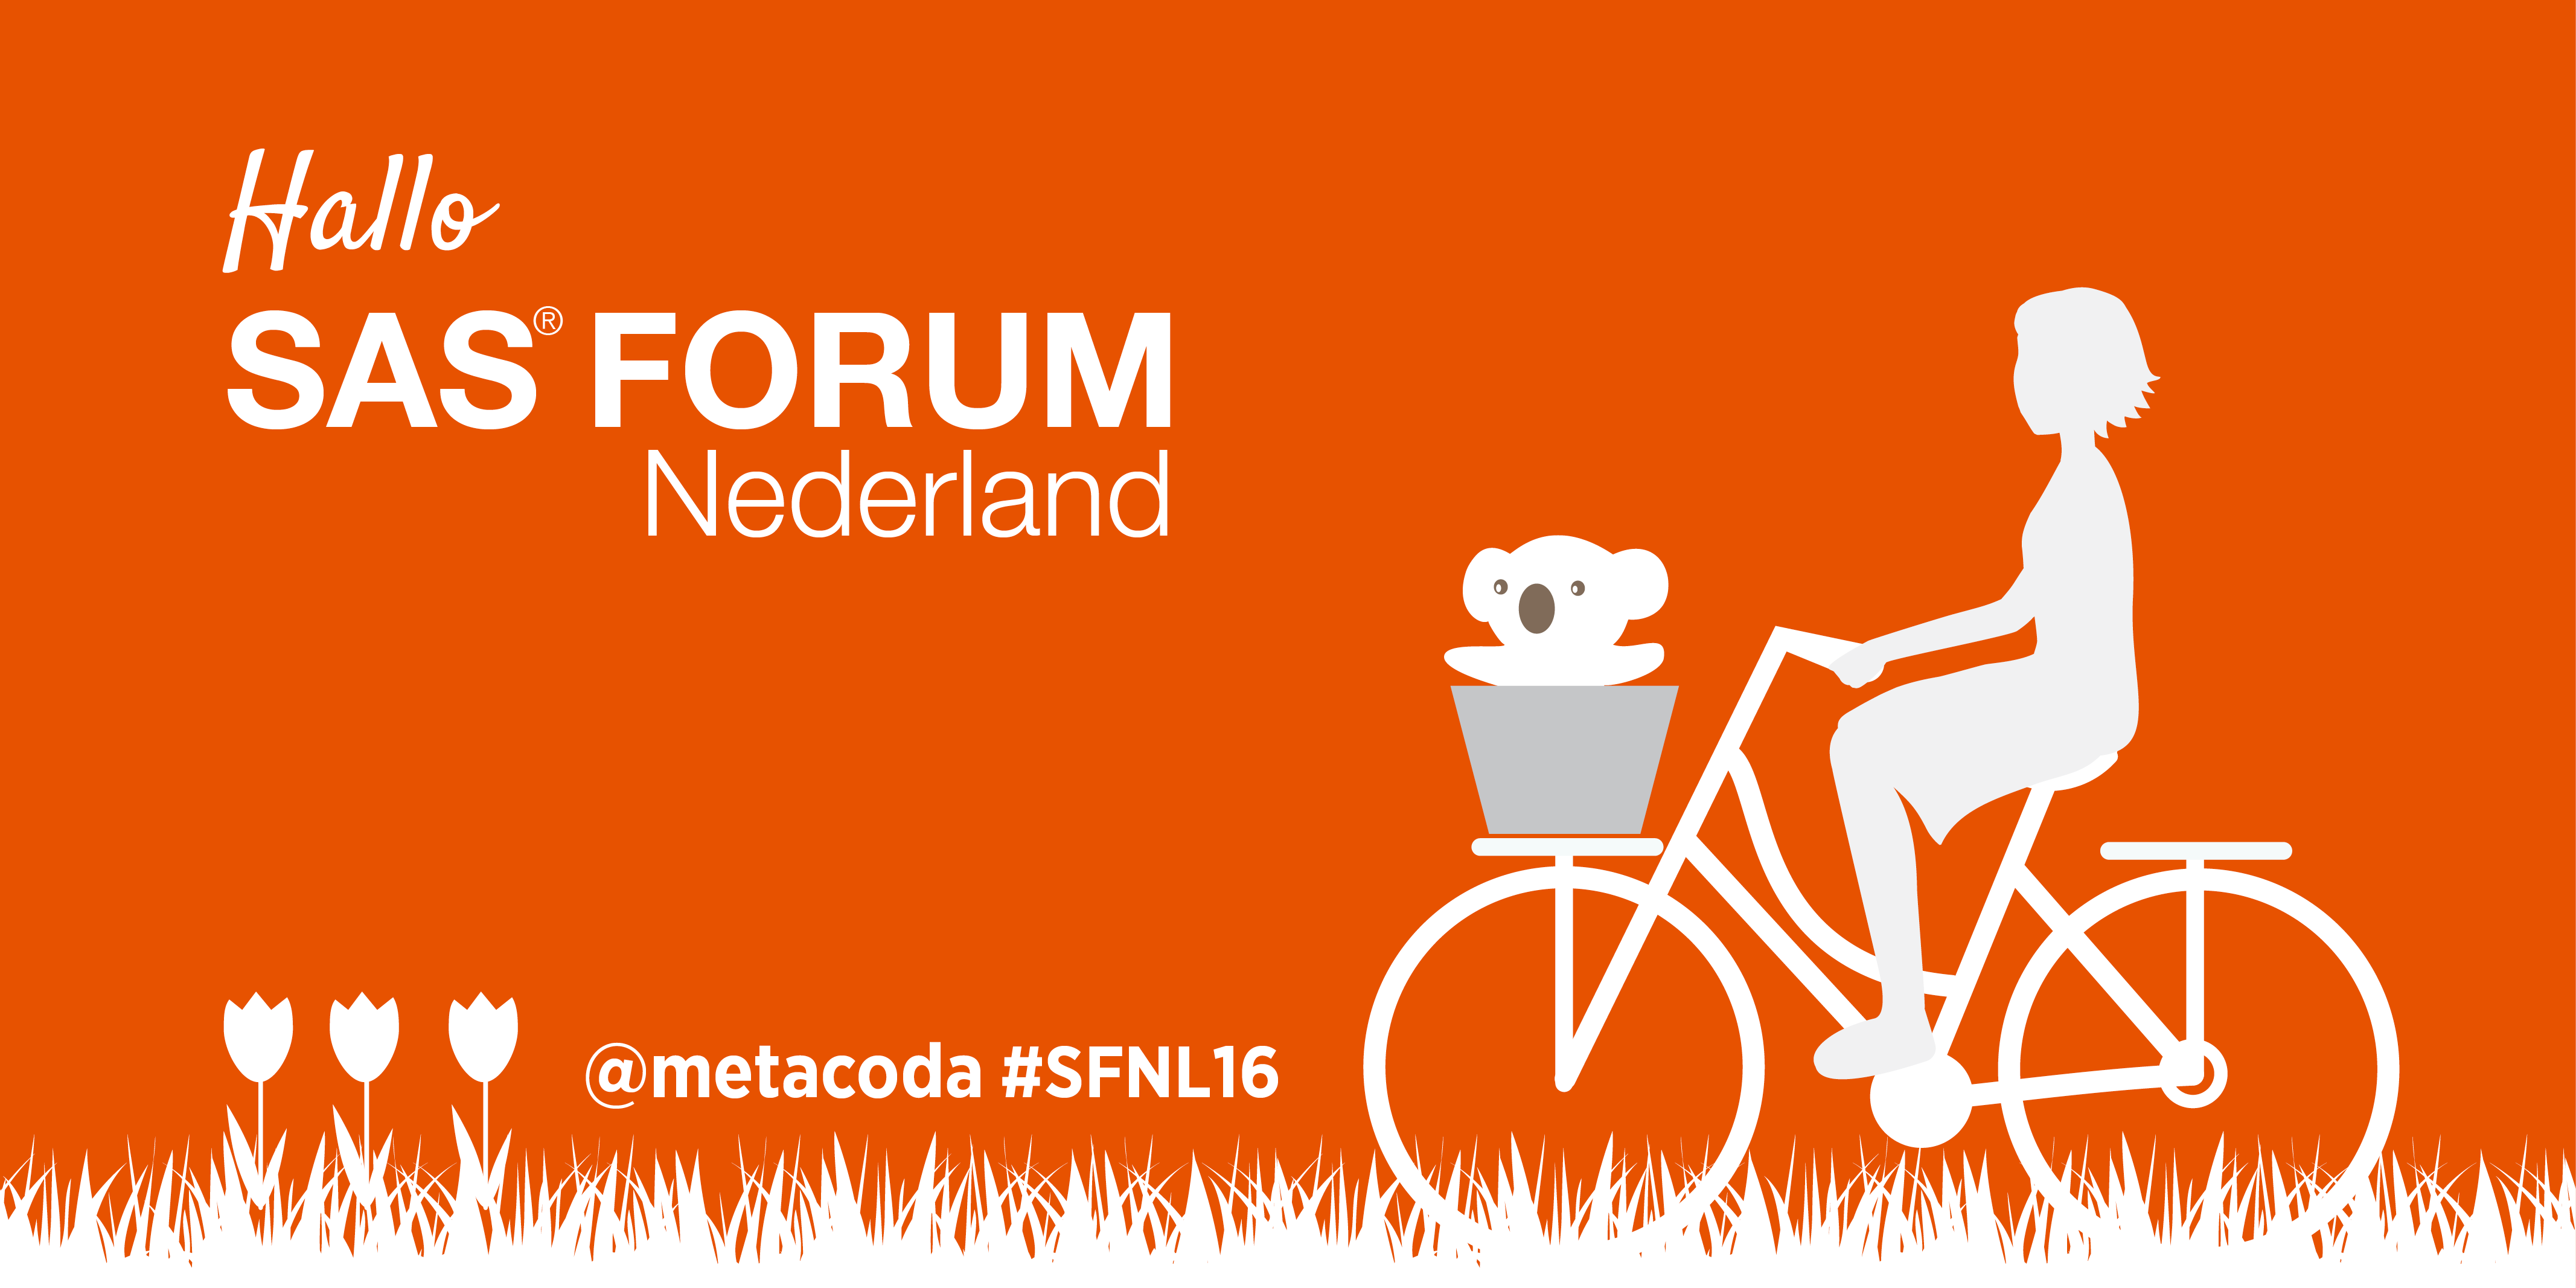 Metacoda Koalas SAS Forum 2016 Netherland Social